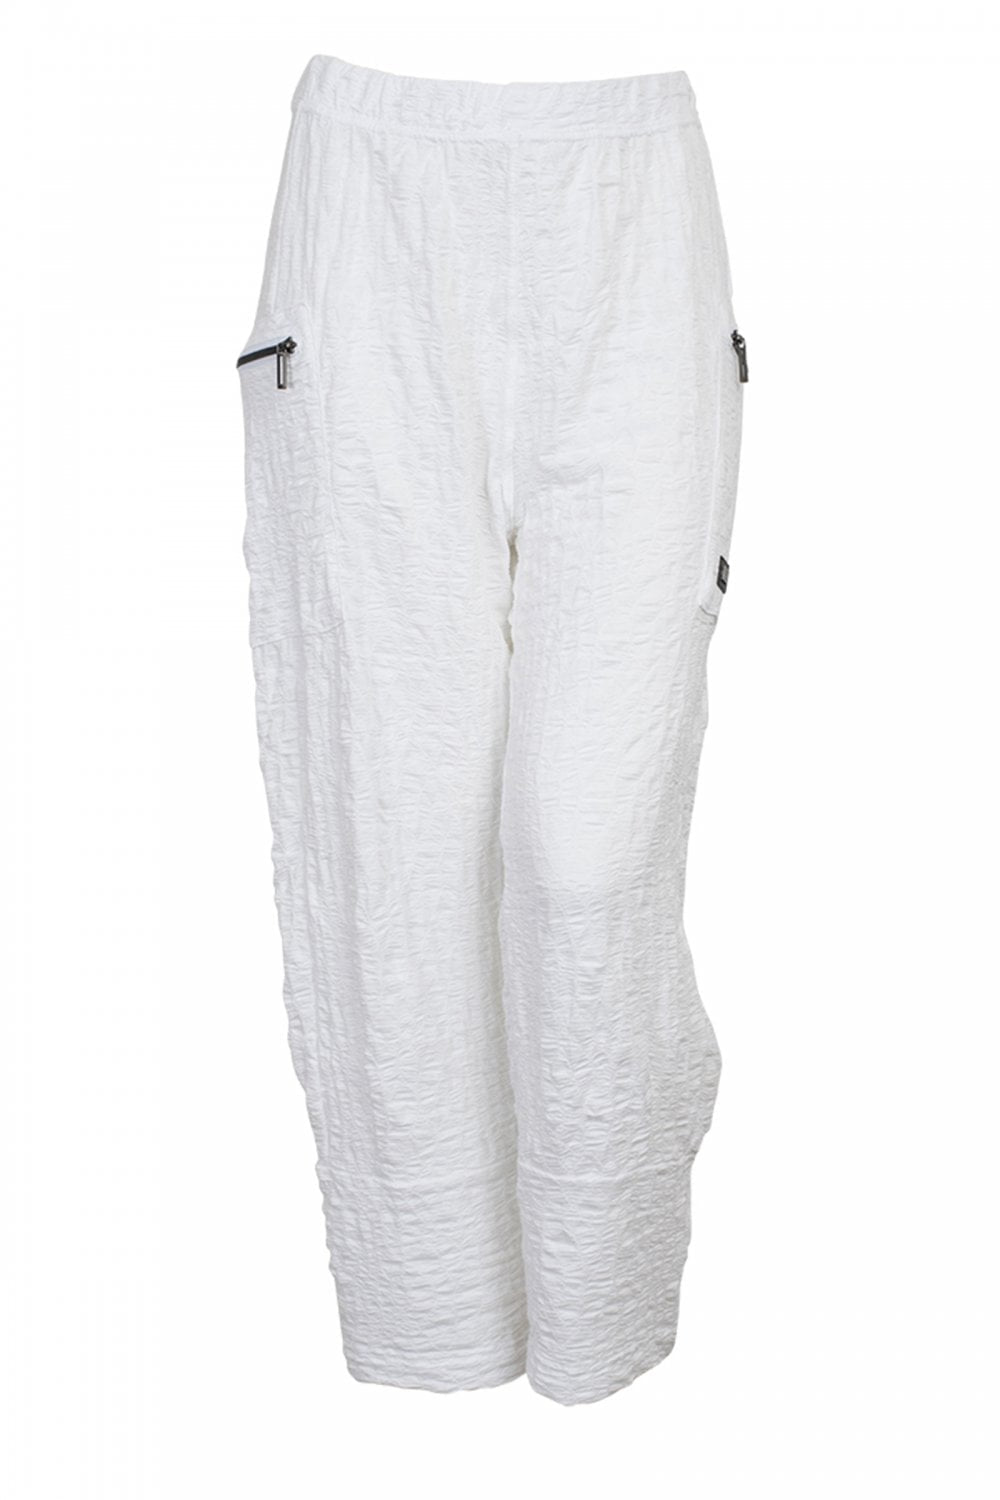 NAS24253 white  cuff trouser